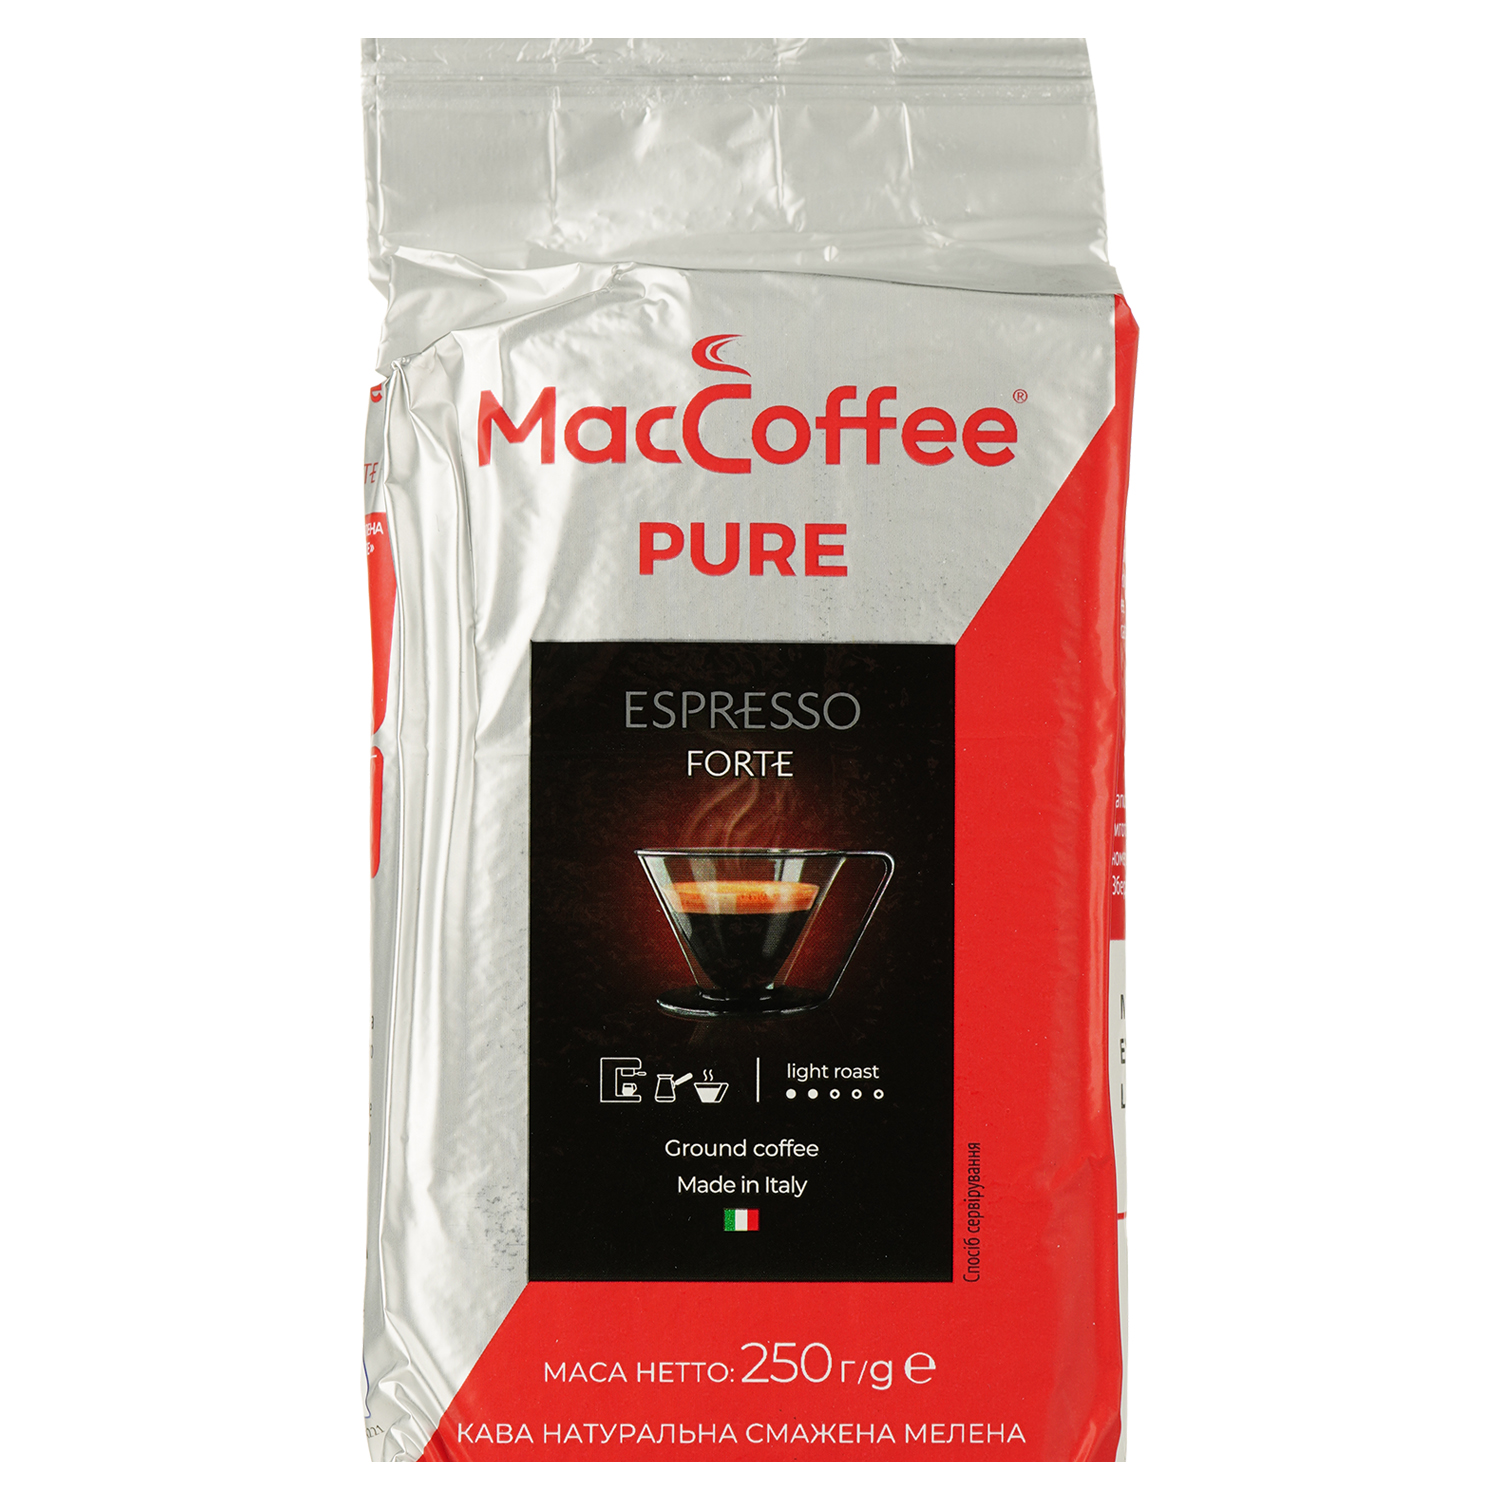 Кофе молотый MacCoffee Espresso Forte Pure, натуральный, жареный, 250 г (882593) - фото 1